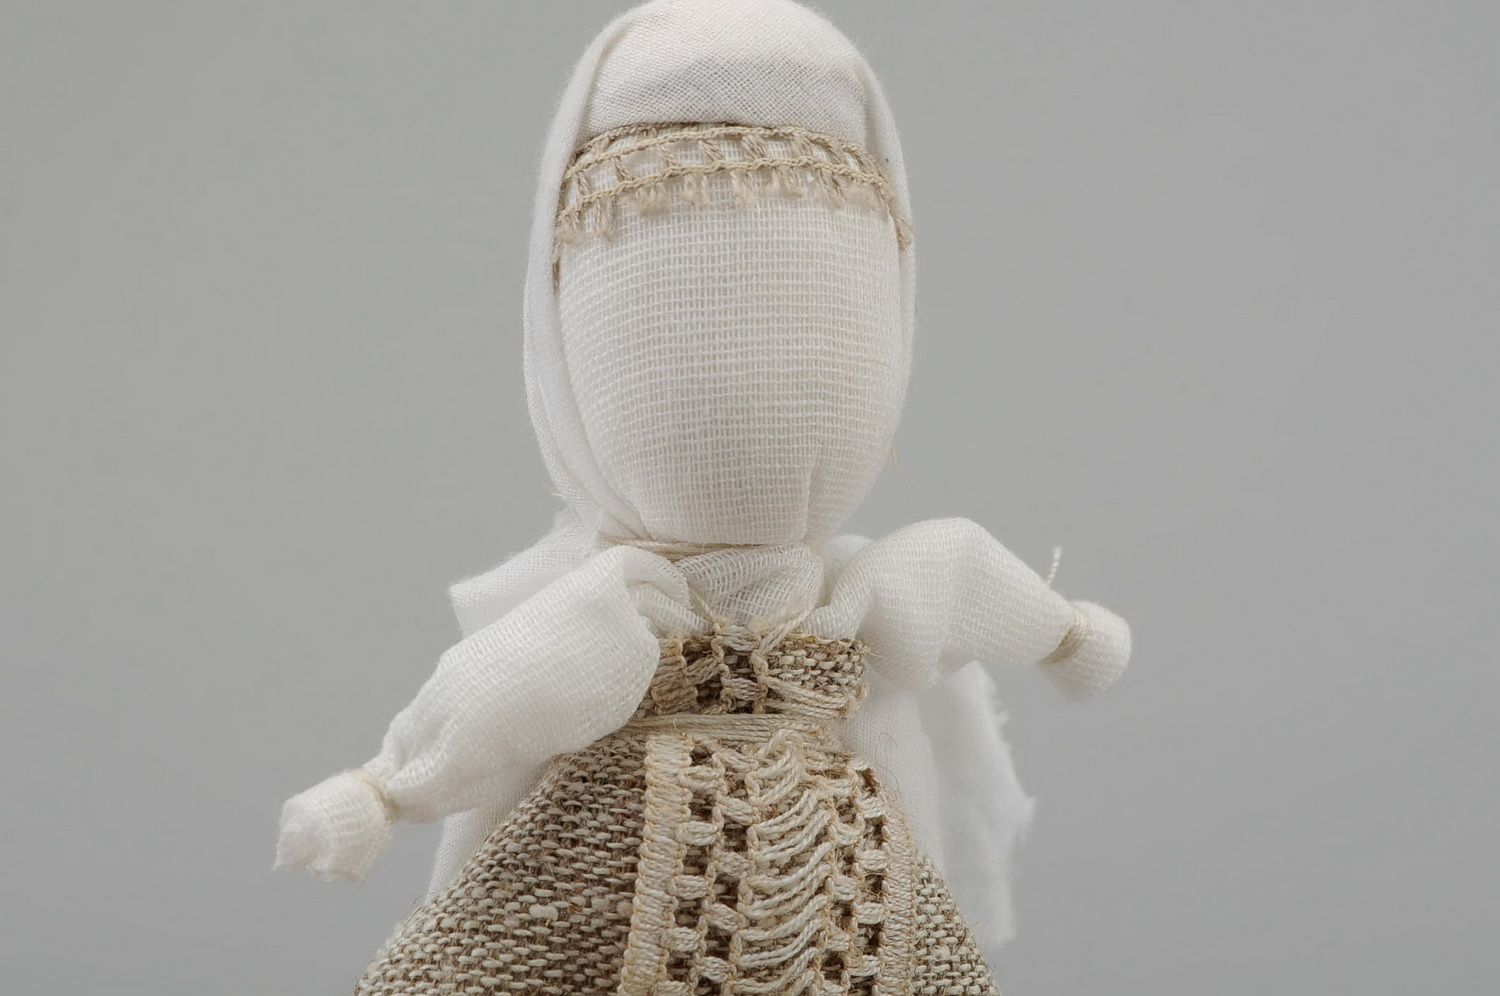 Motanka-poupée ethnique en tissu faite main photo 5